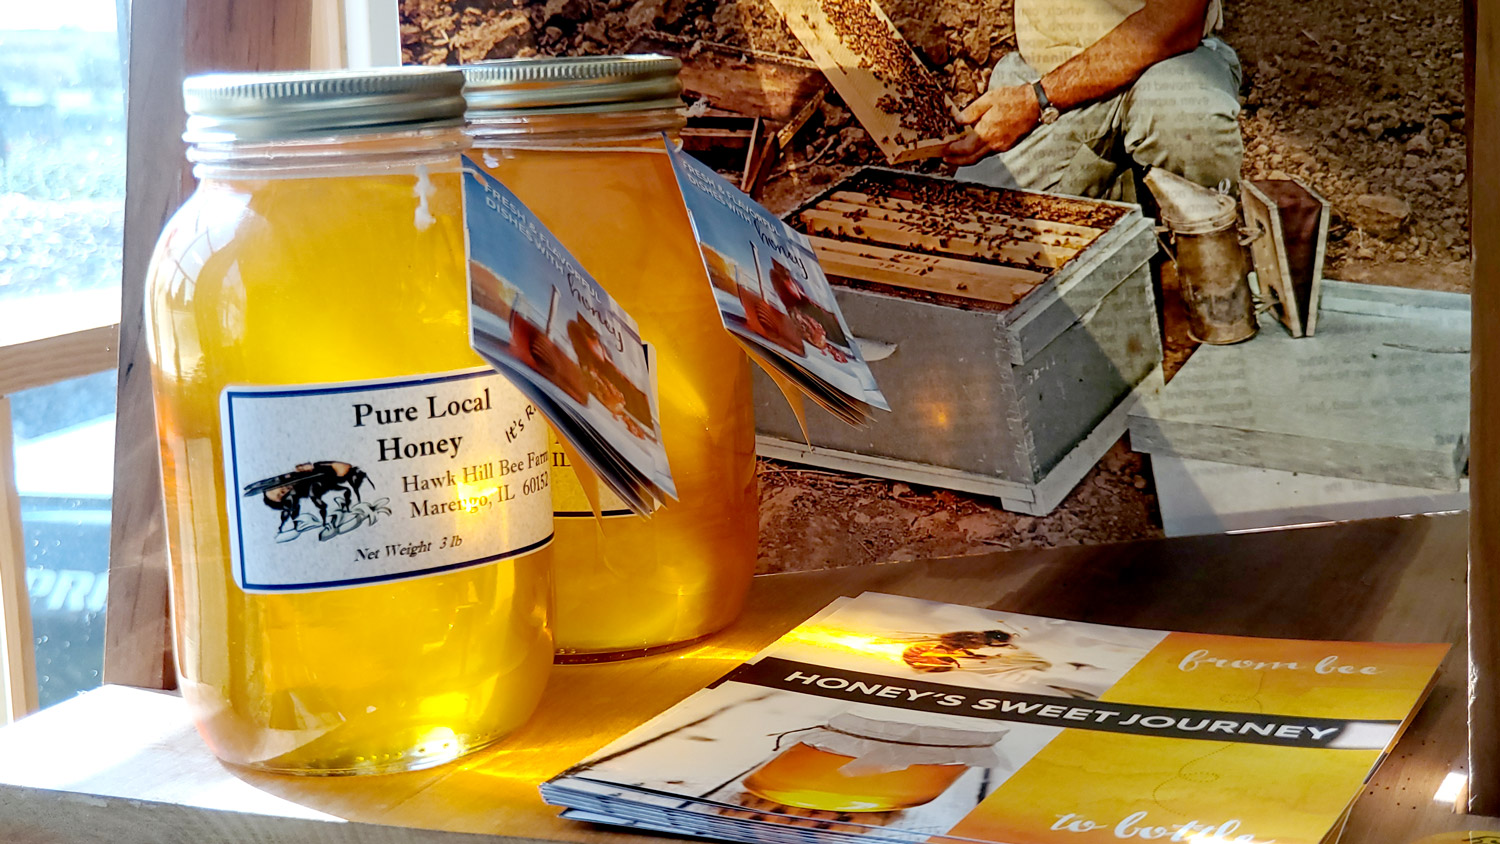 Pure local honey from Hawk Hill Bee Farm at Grace Farm Studios.